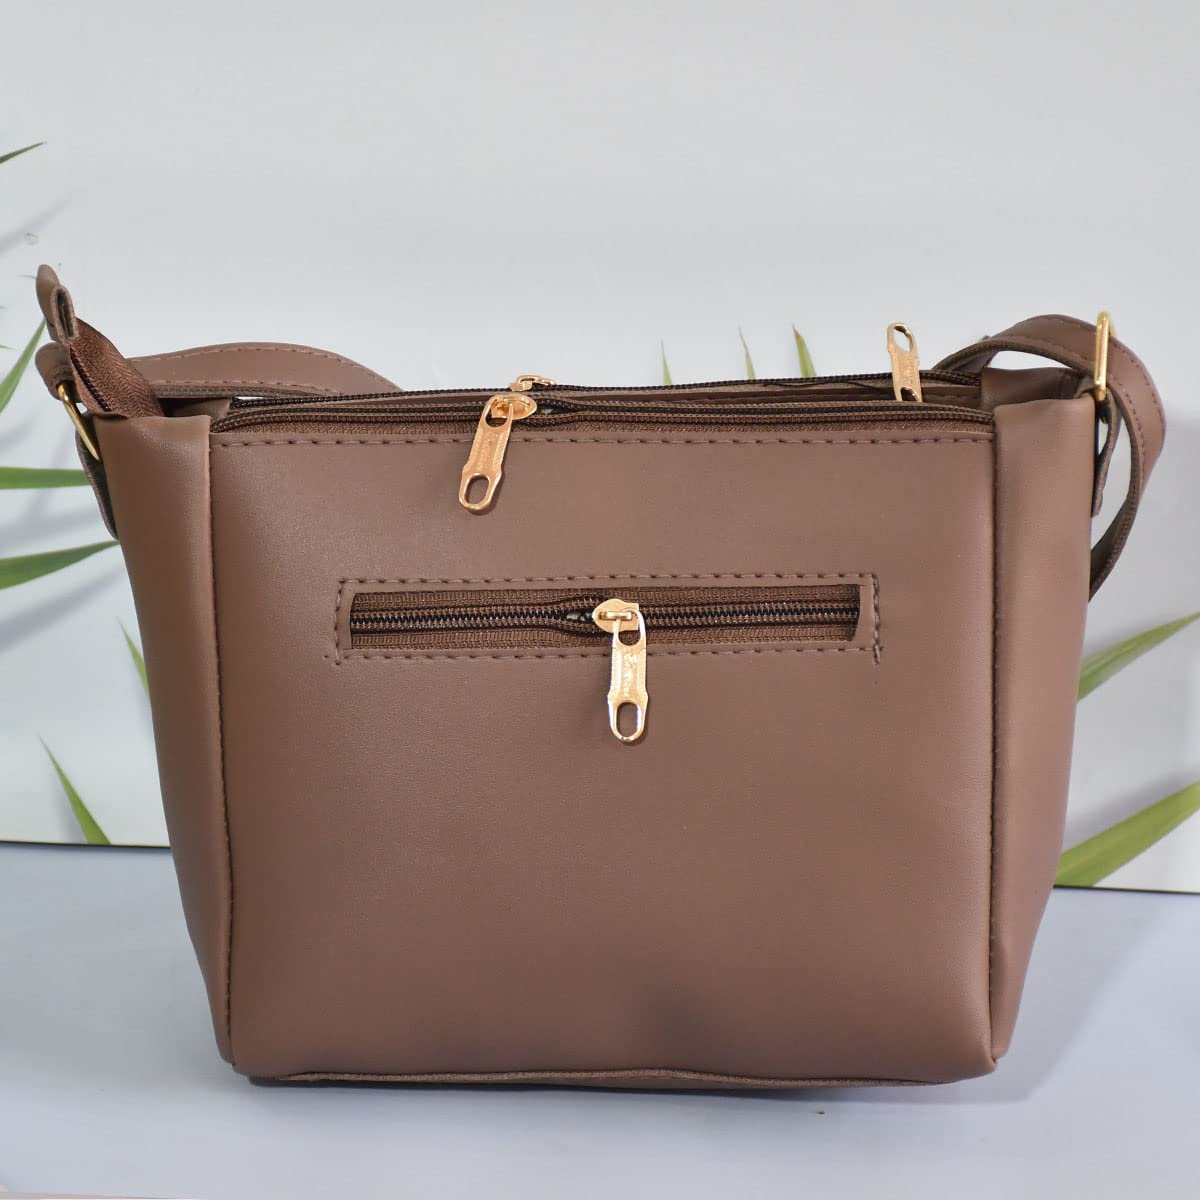 Designer Mens Pure Leather Briefcase Black Weave, Messenger Bag, Black  Leather Laptop Bag For Business, Office, Travel And More From  Superjerseys8, $119.4 | DHgate.Com